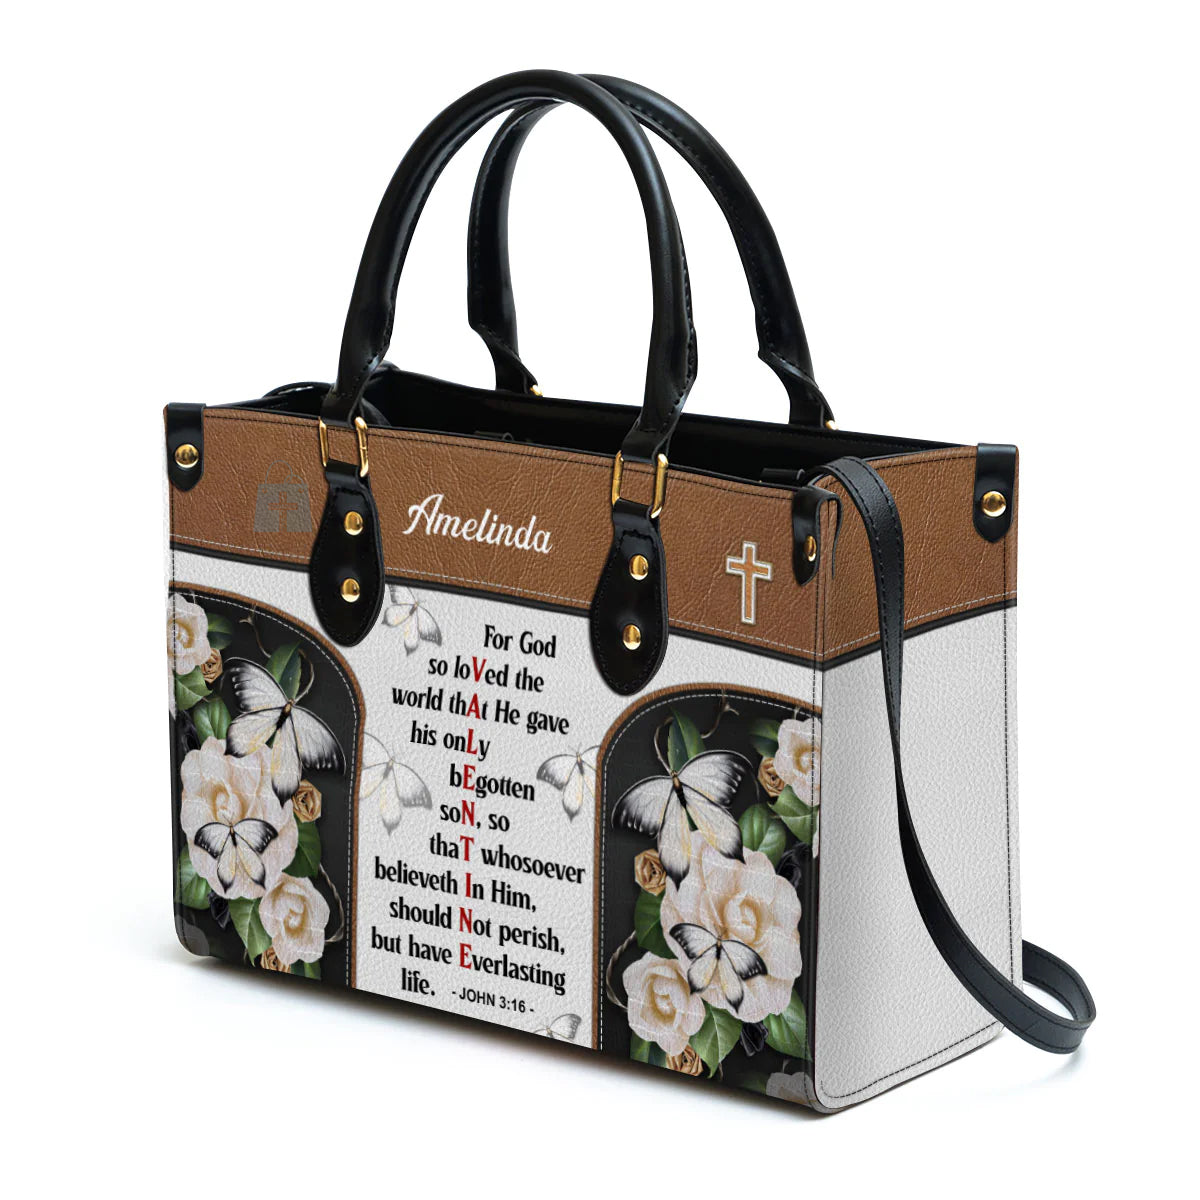 Christianart Handbag, Christian Valentines Day Ideas John 3:16, For God So Loved The World, Personalized Gifts, Gifts for Women. - Christian Art Bag